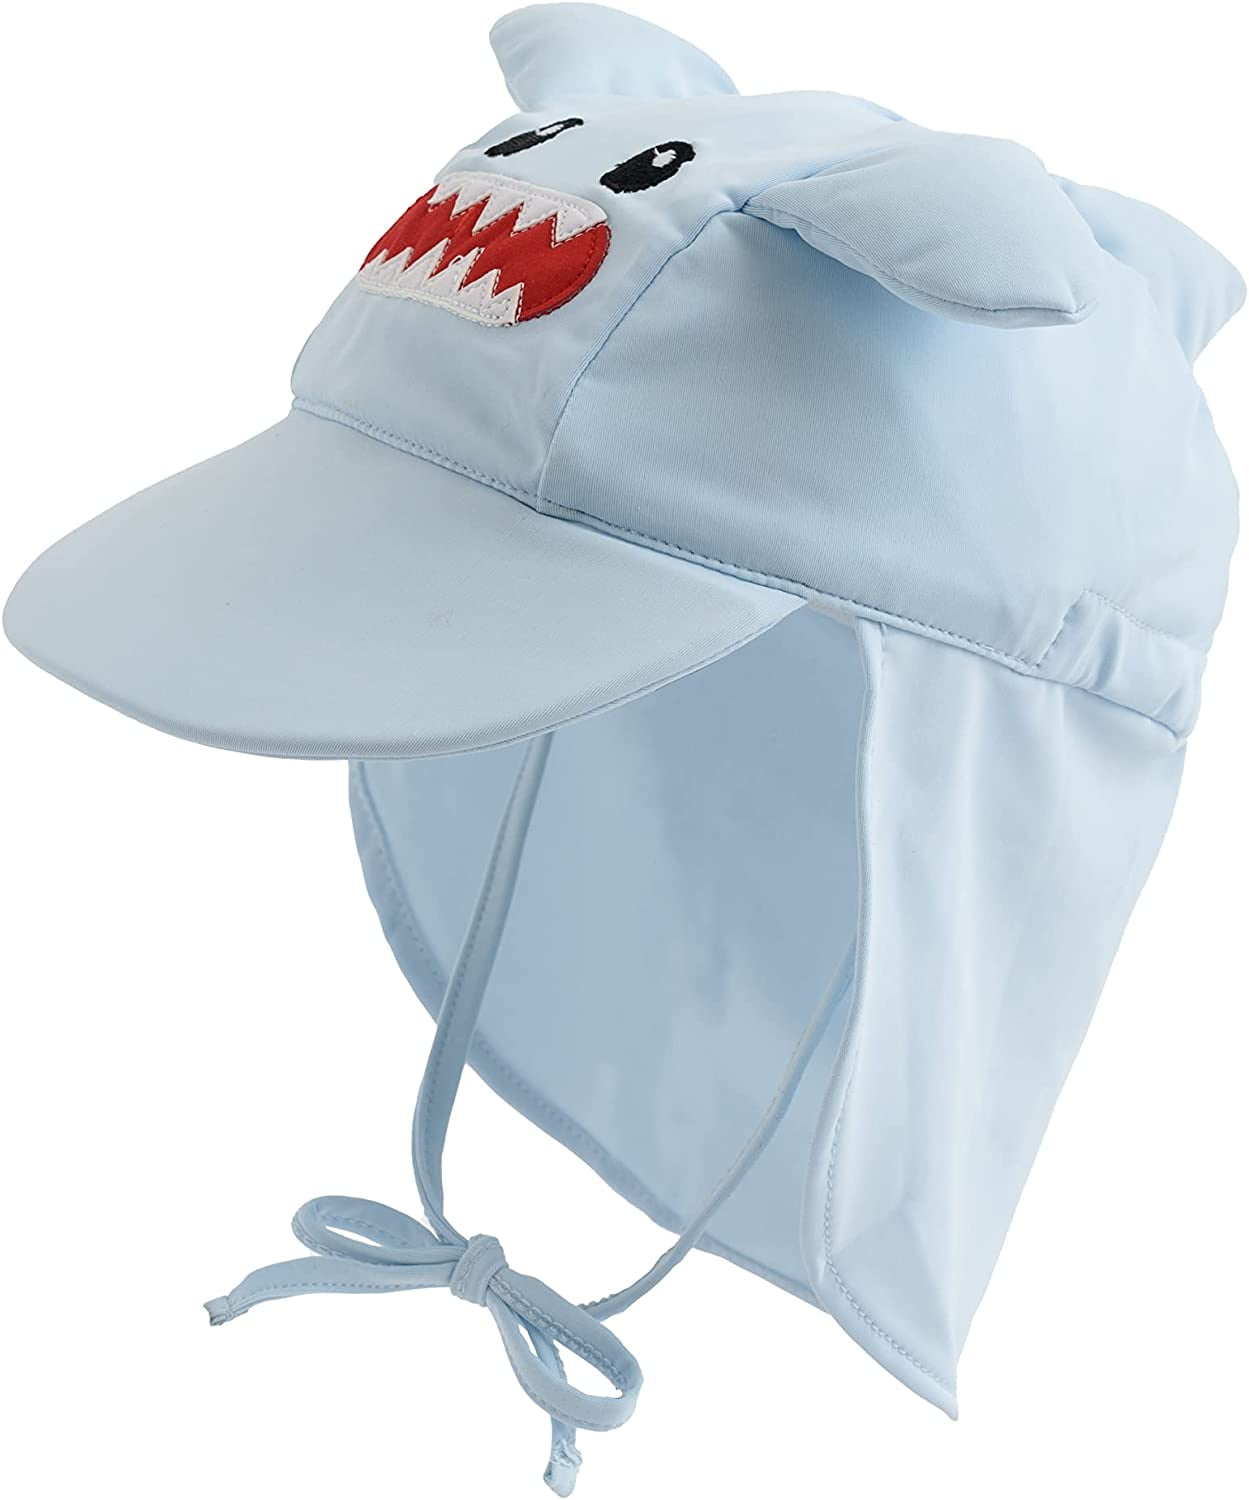 Wide Brim Sun Hat – Multifunctional UPF 50 Protection Bucket